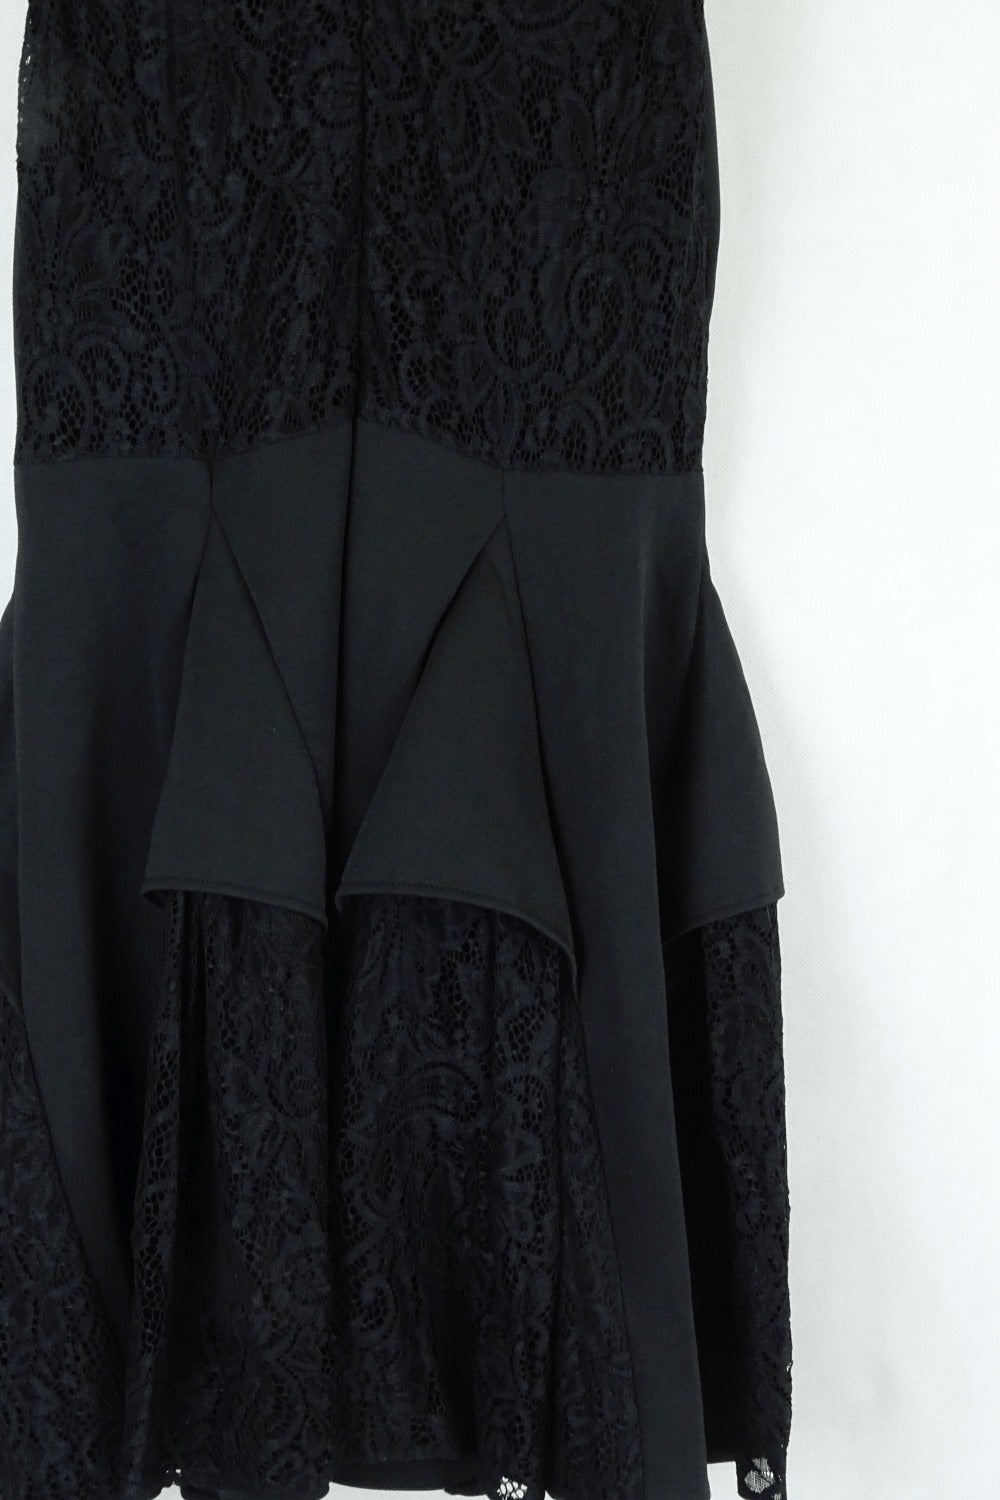 Asos Black Lace Dress 14